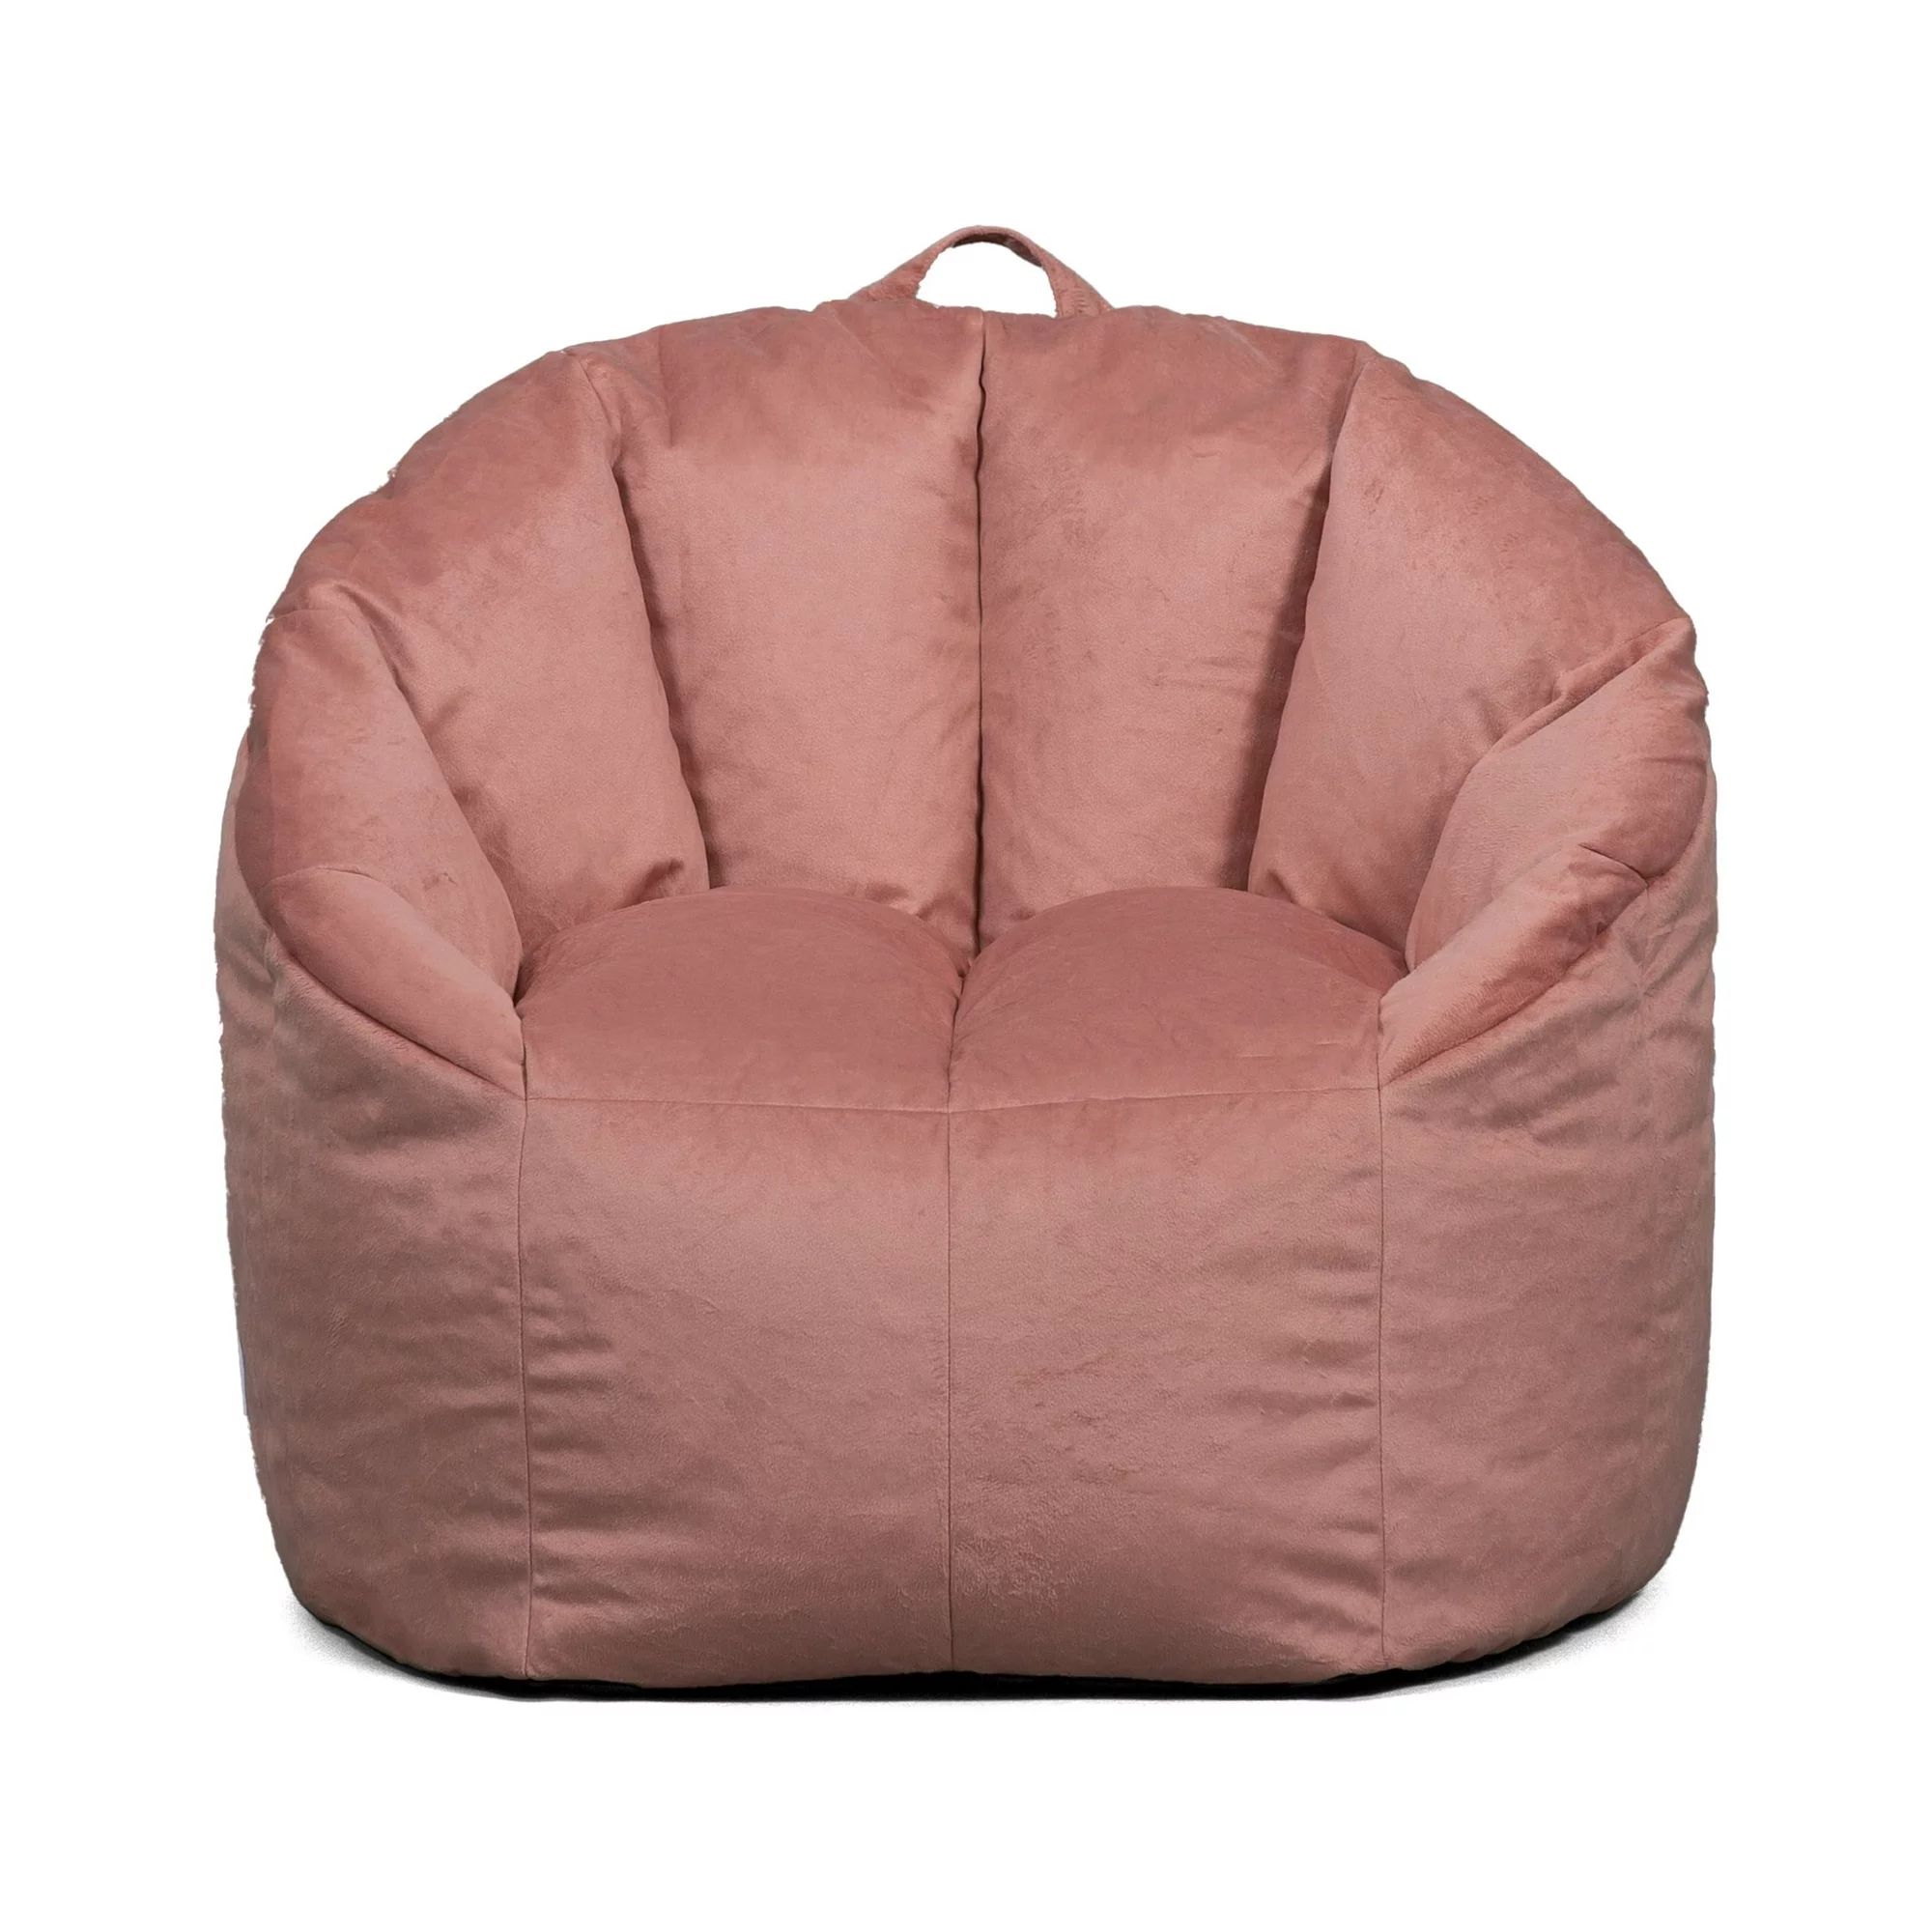 Big Joe Milano Bean Bag Chair, Desert Rose Plush, Soft Polyester, 2.5 feet | Walmart (US)